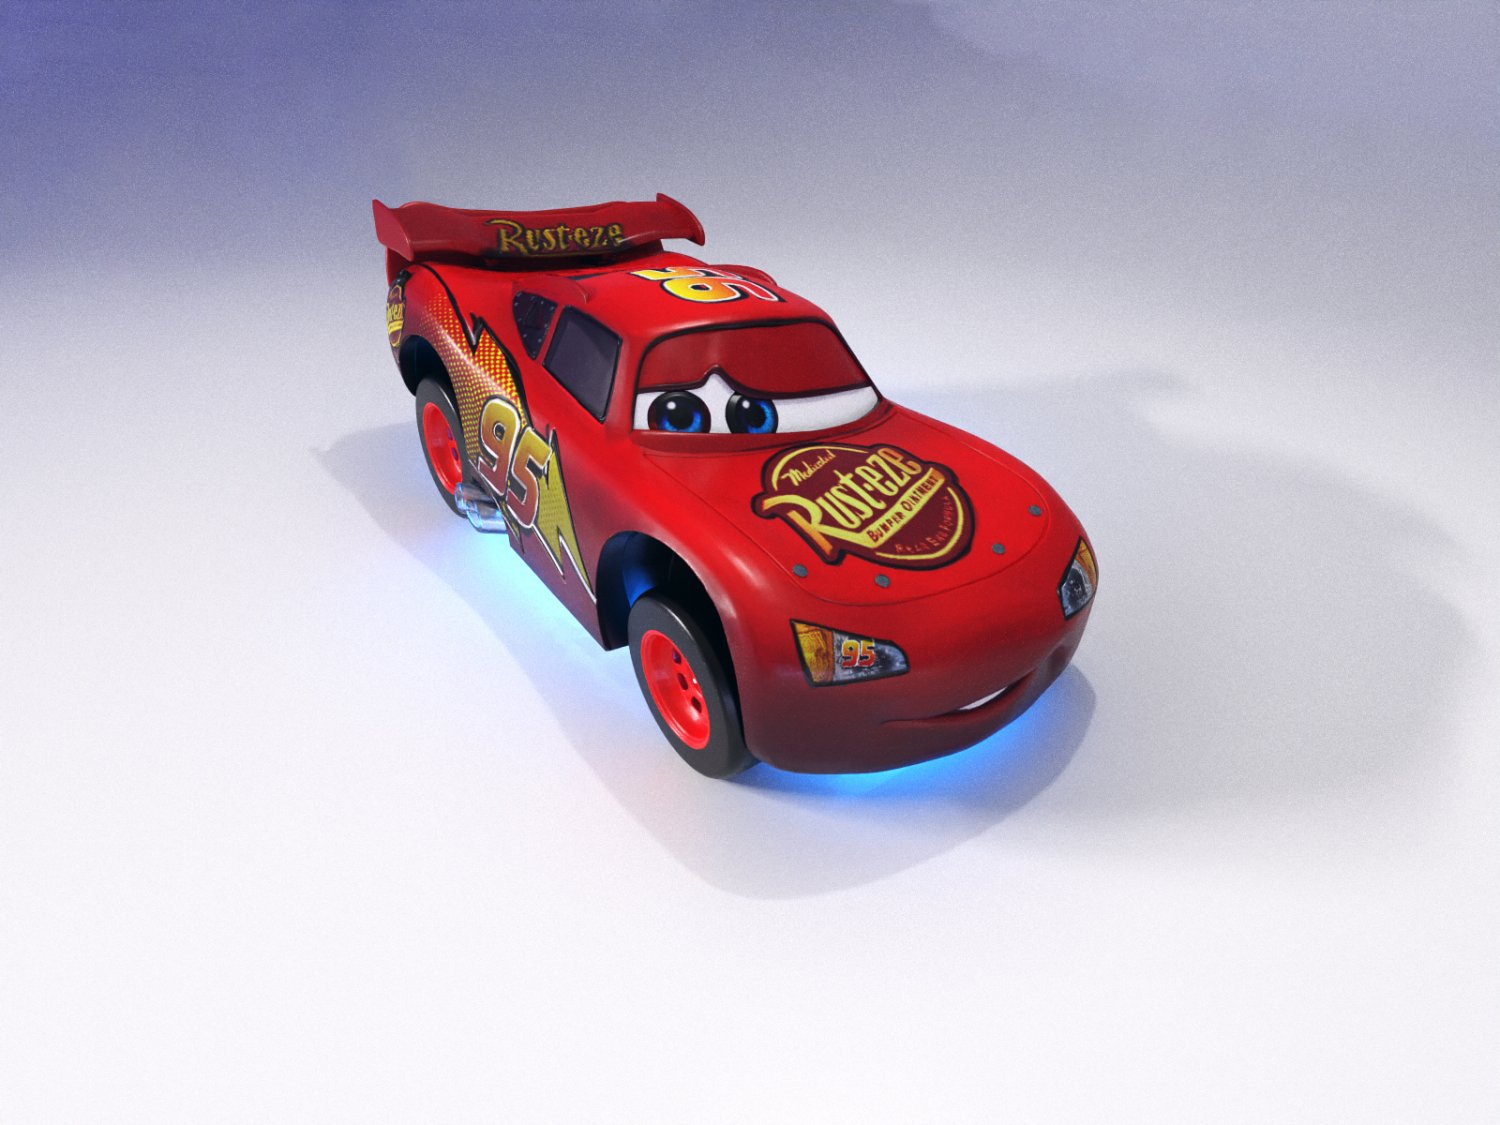 Disney Pixar Cars 3 Lot Lightning McQueen 1:55 Model Toy Cars